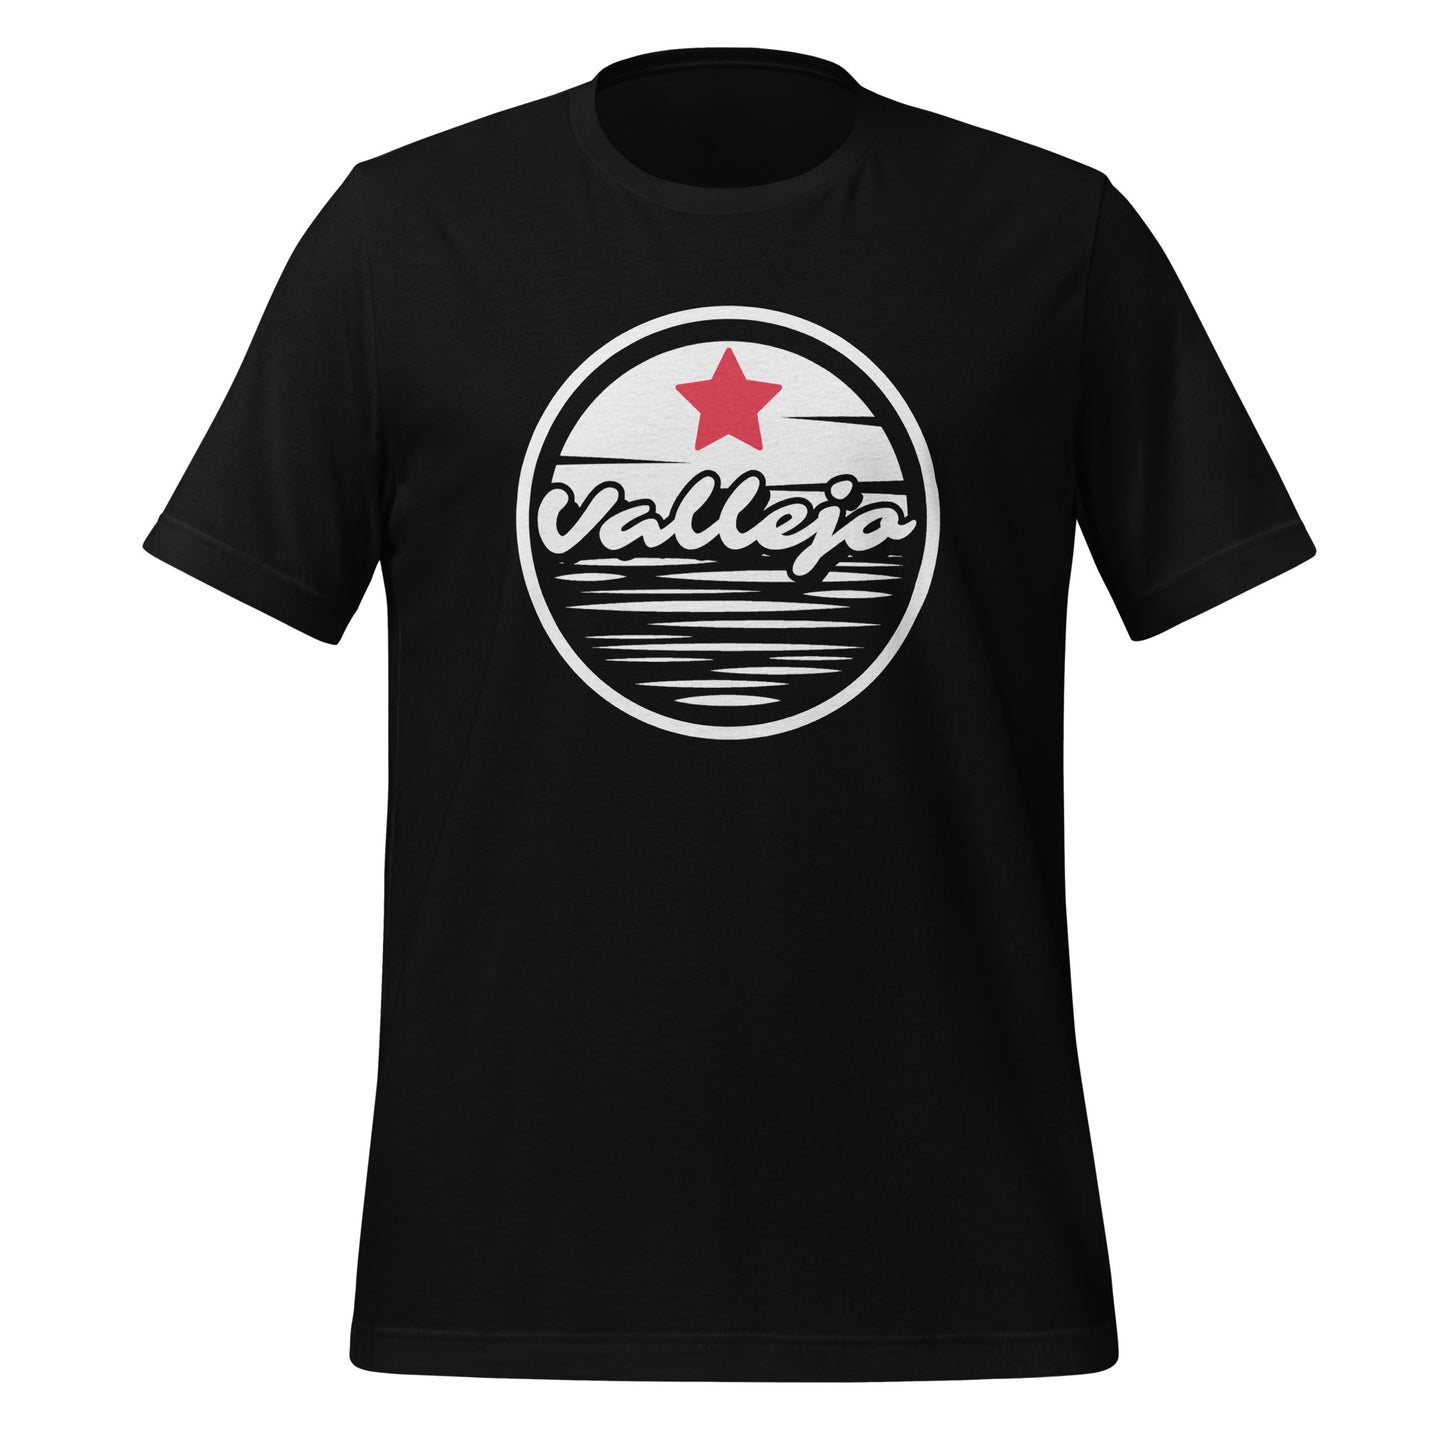 Vallejo (My Town) Unisex T-Shirt